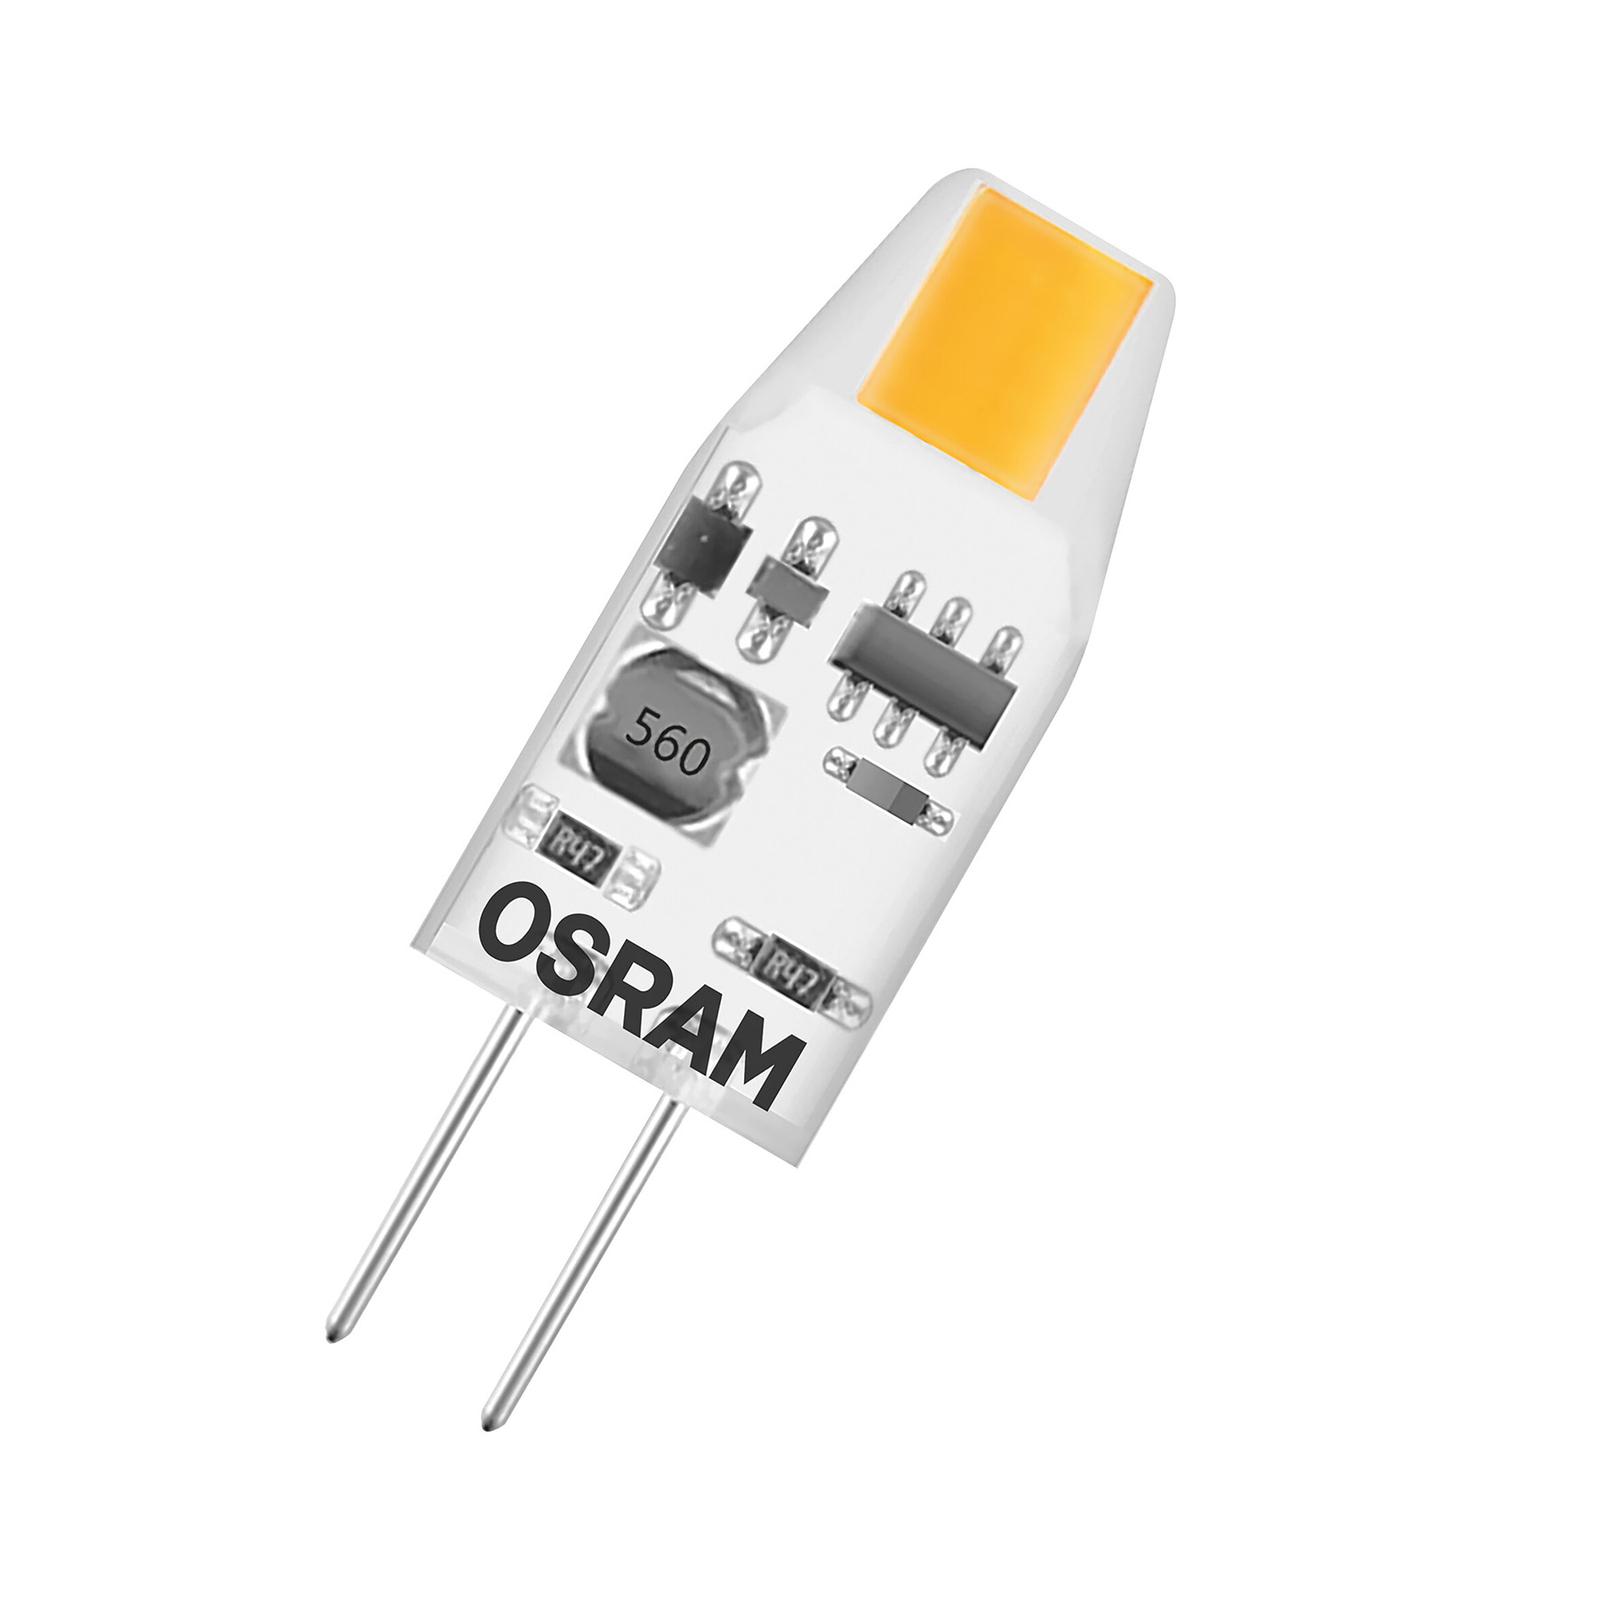 OSRAM PIN Micro bi-pin LED bulb G4 1W 100lm 2,700K